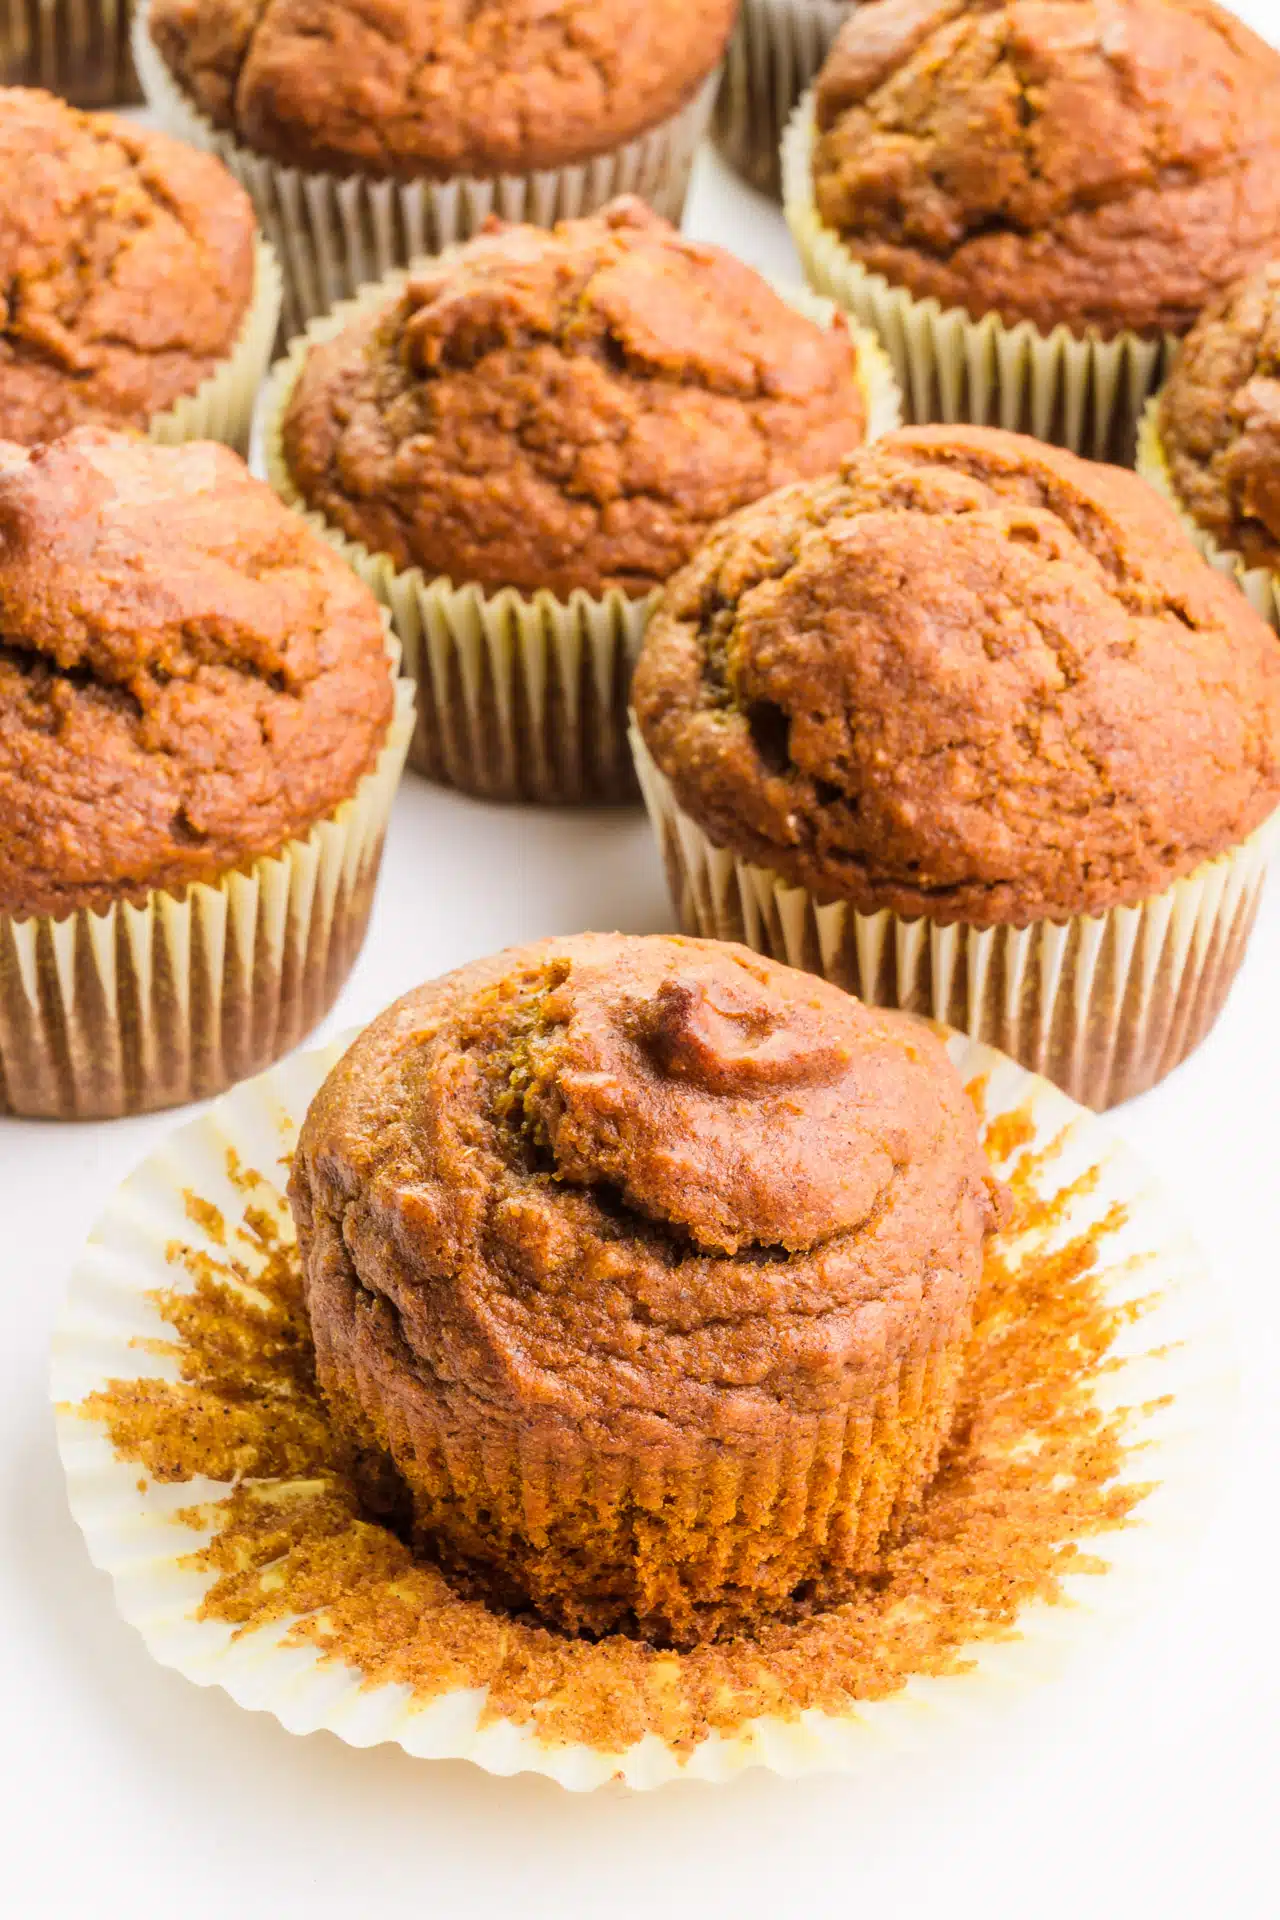 A vegan pumpkin muffin sits in front of more pumpkin muffins.